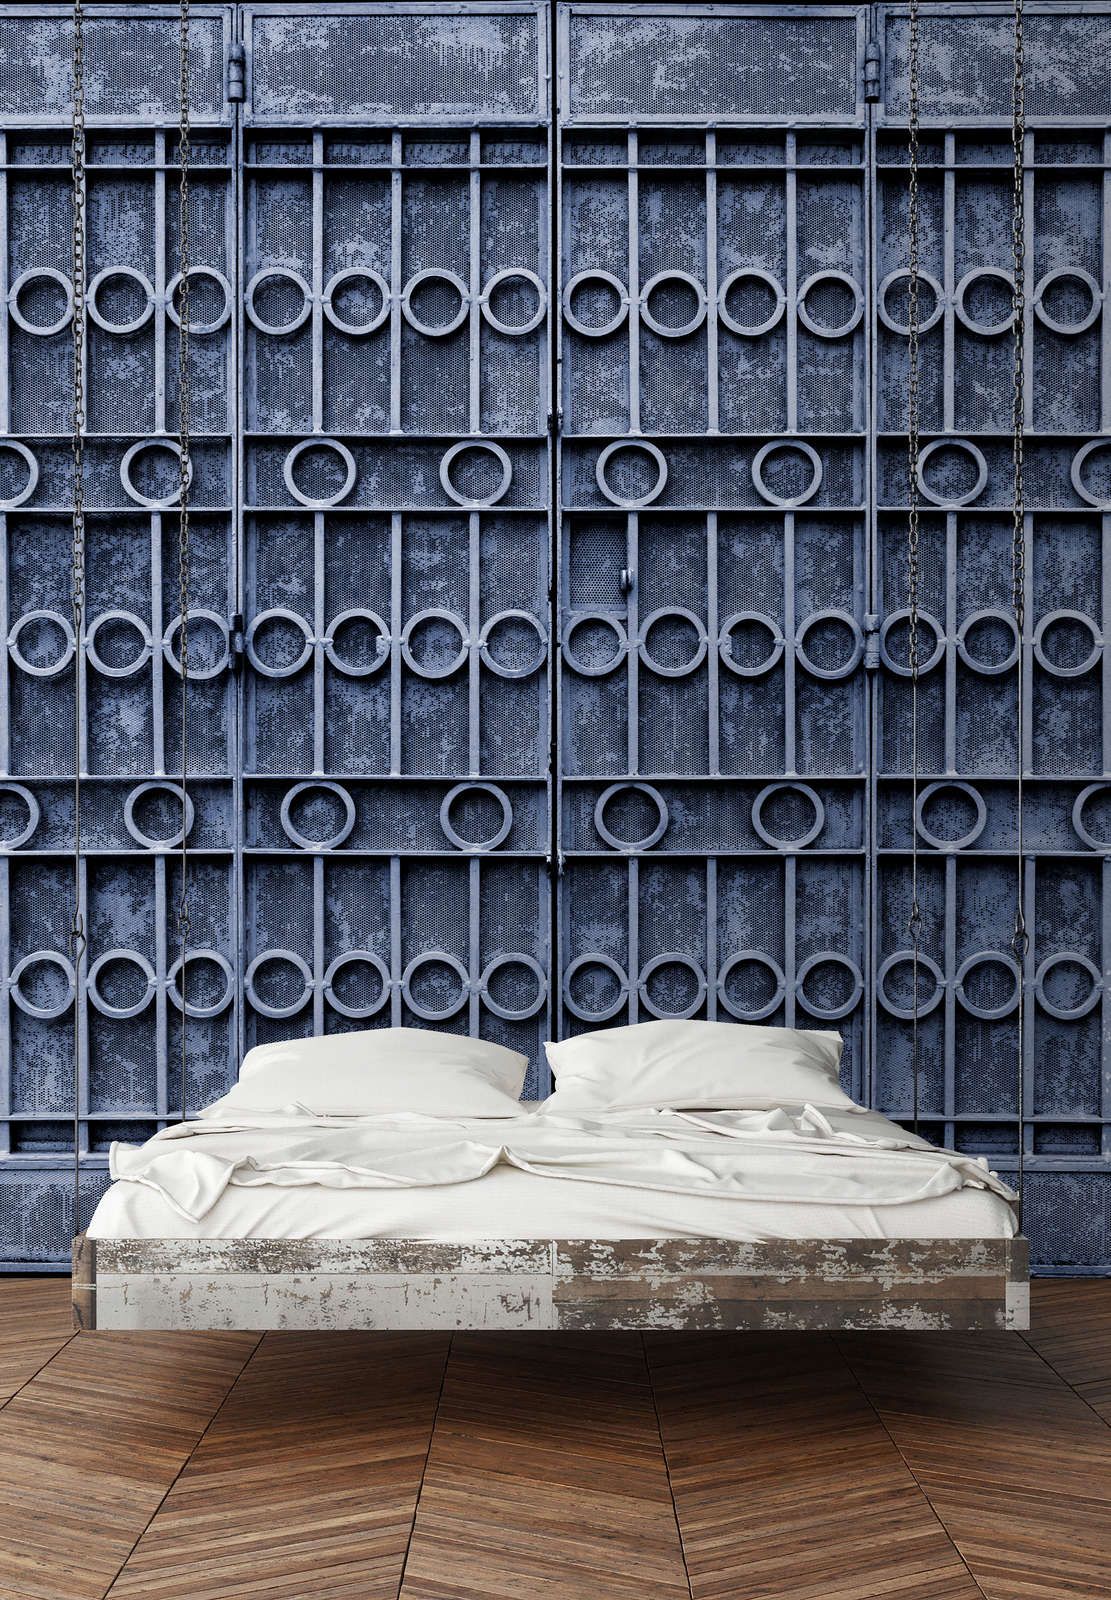             Digital behang »jodhpur« - Close-up van een blauw metalen hek - Gladde, licht parelmoerglanzende vliesstof
        